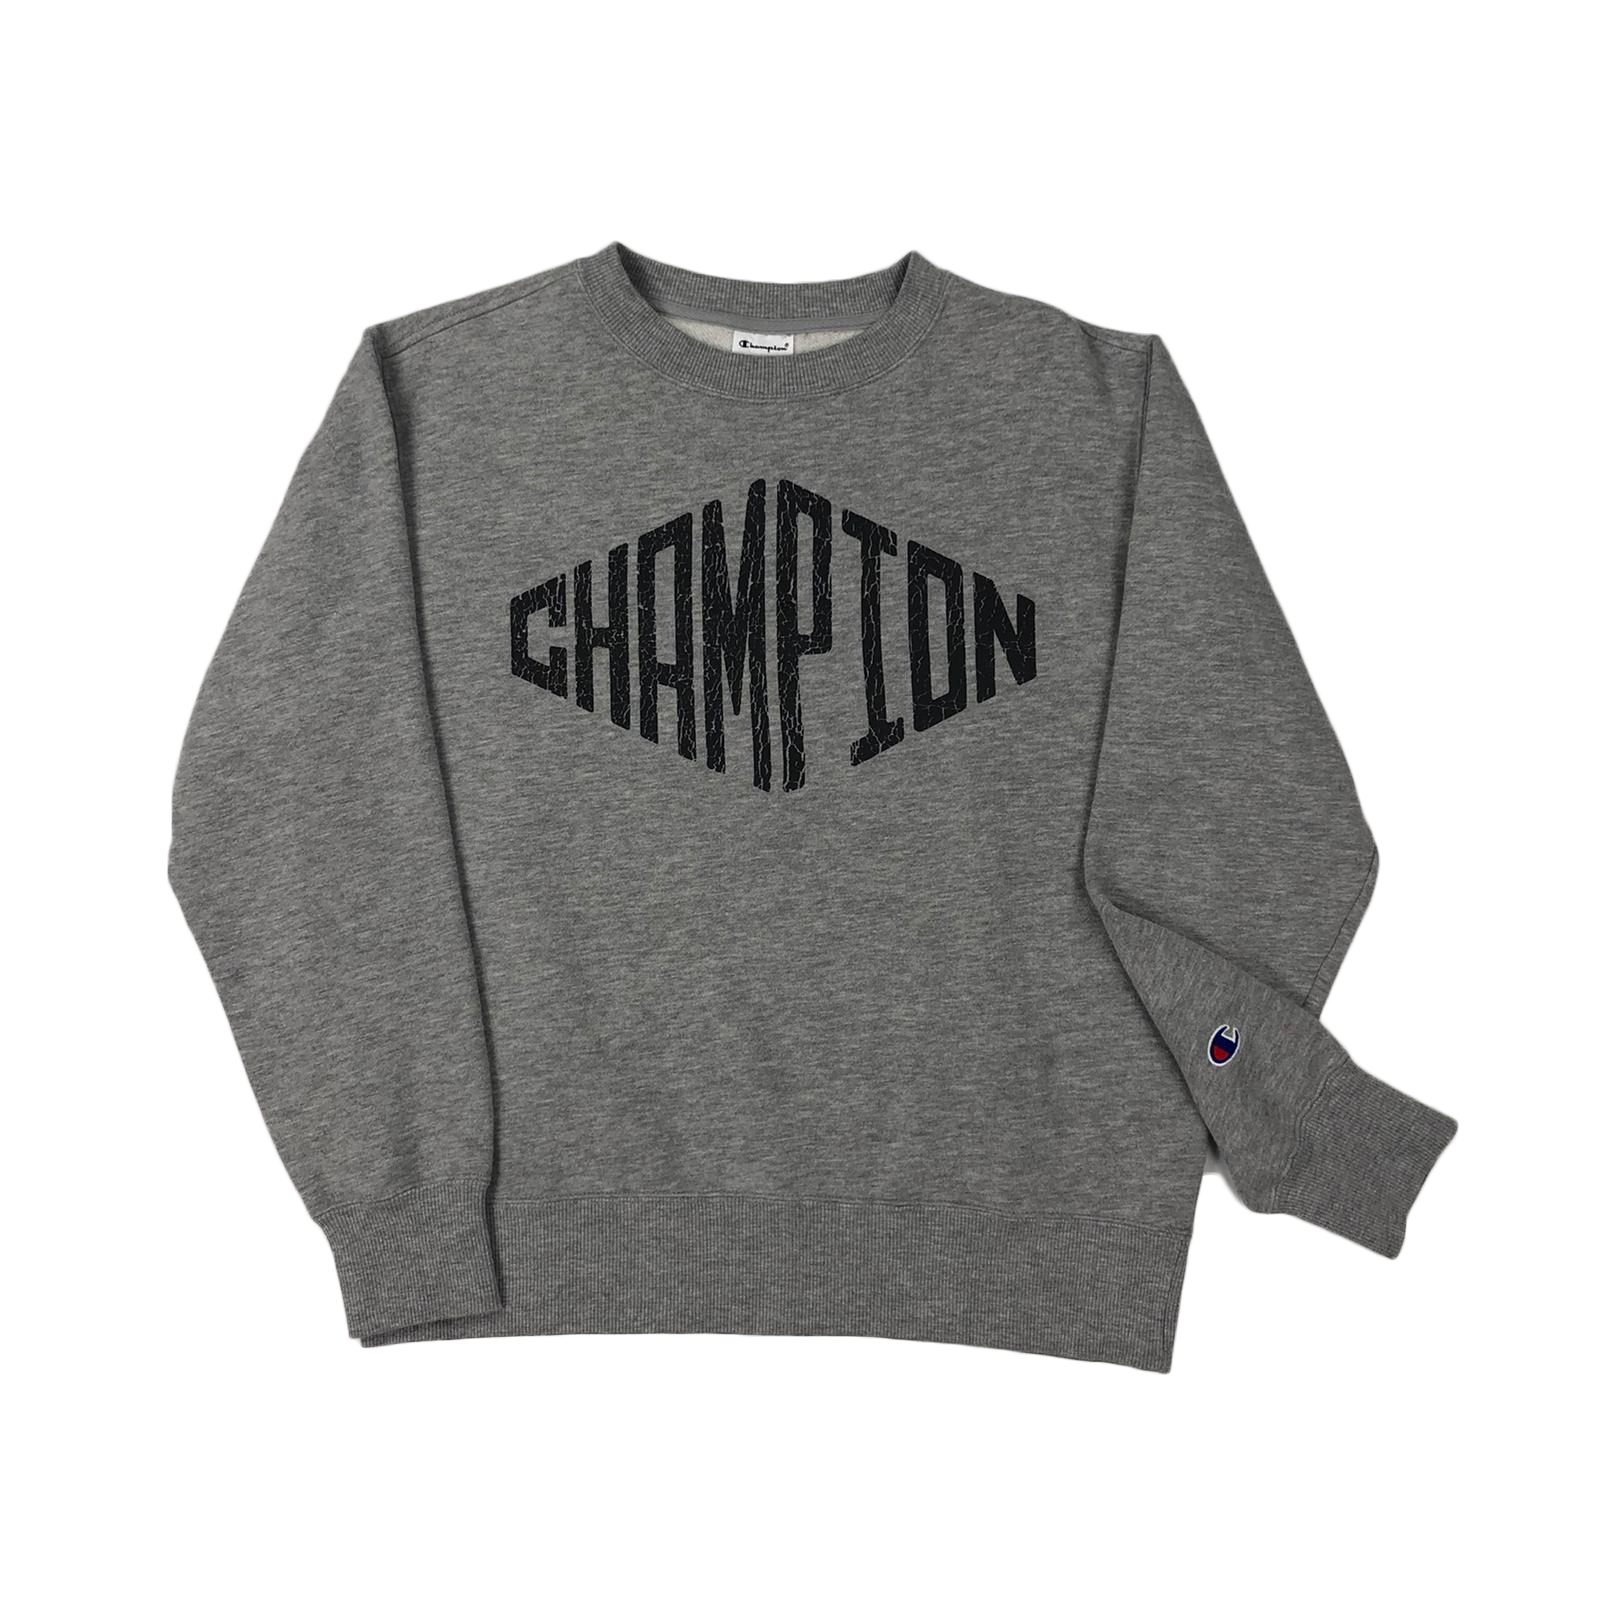 Champion sweatshirt